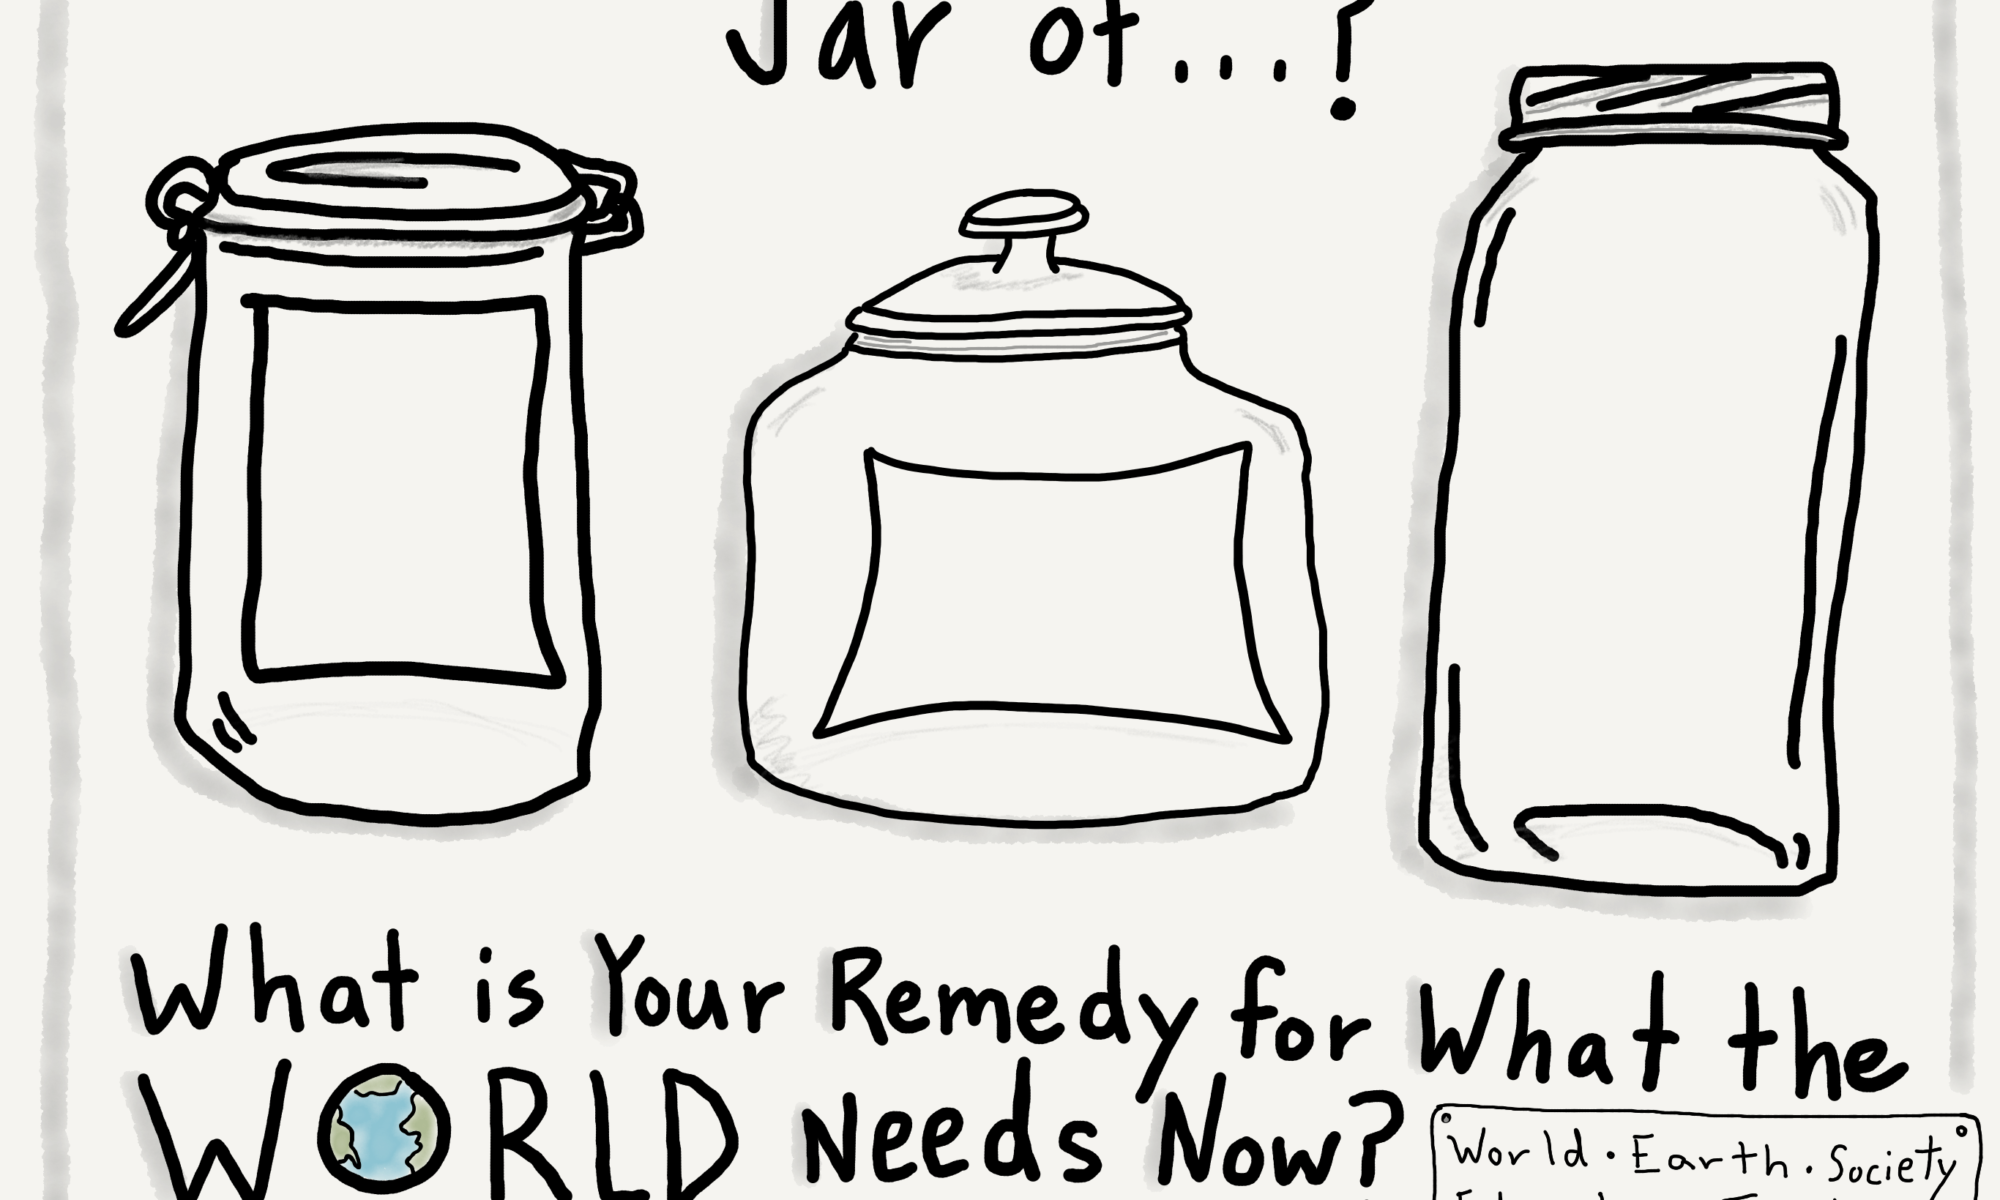 A Jar of...